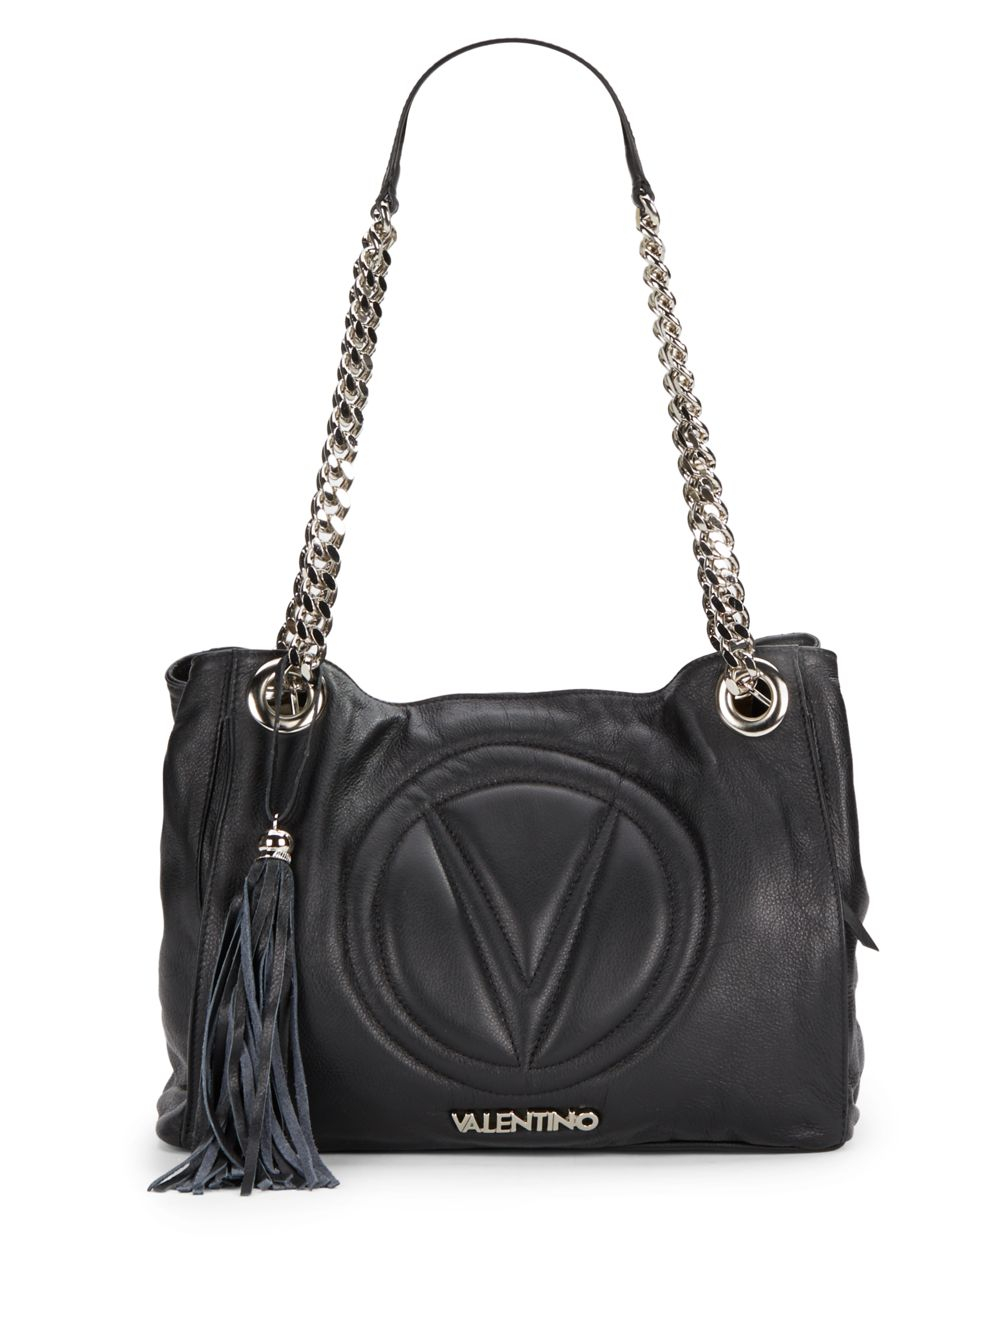 Valentino Chain Handbags | semashow.com